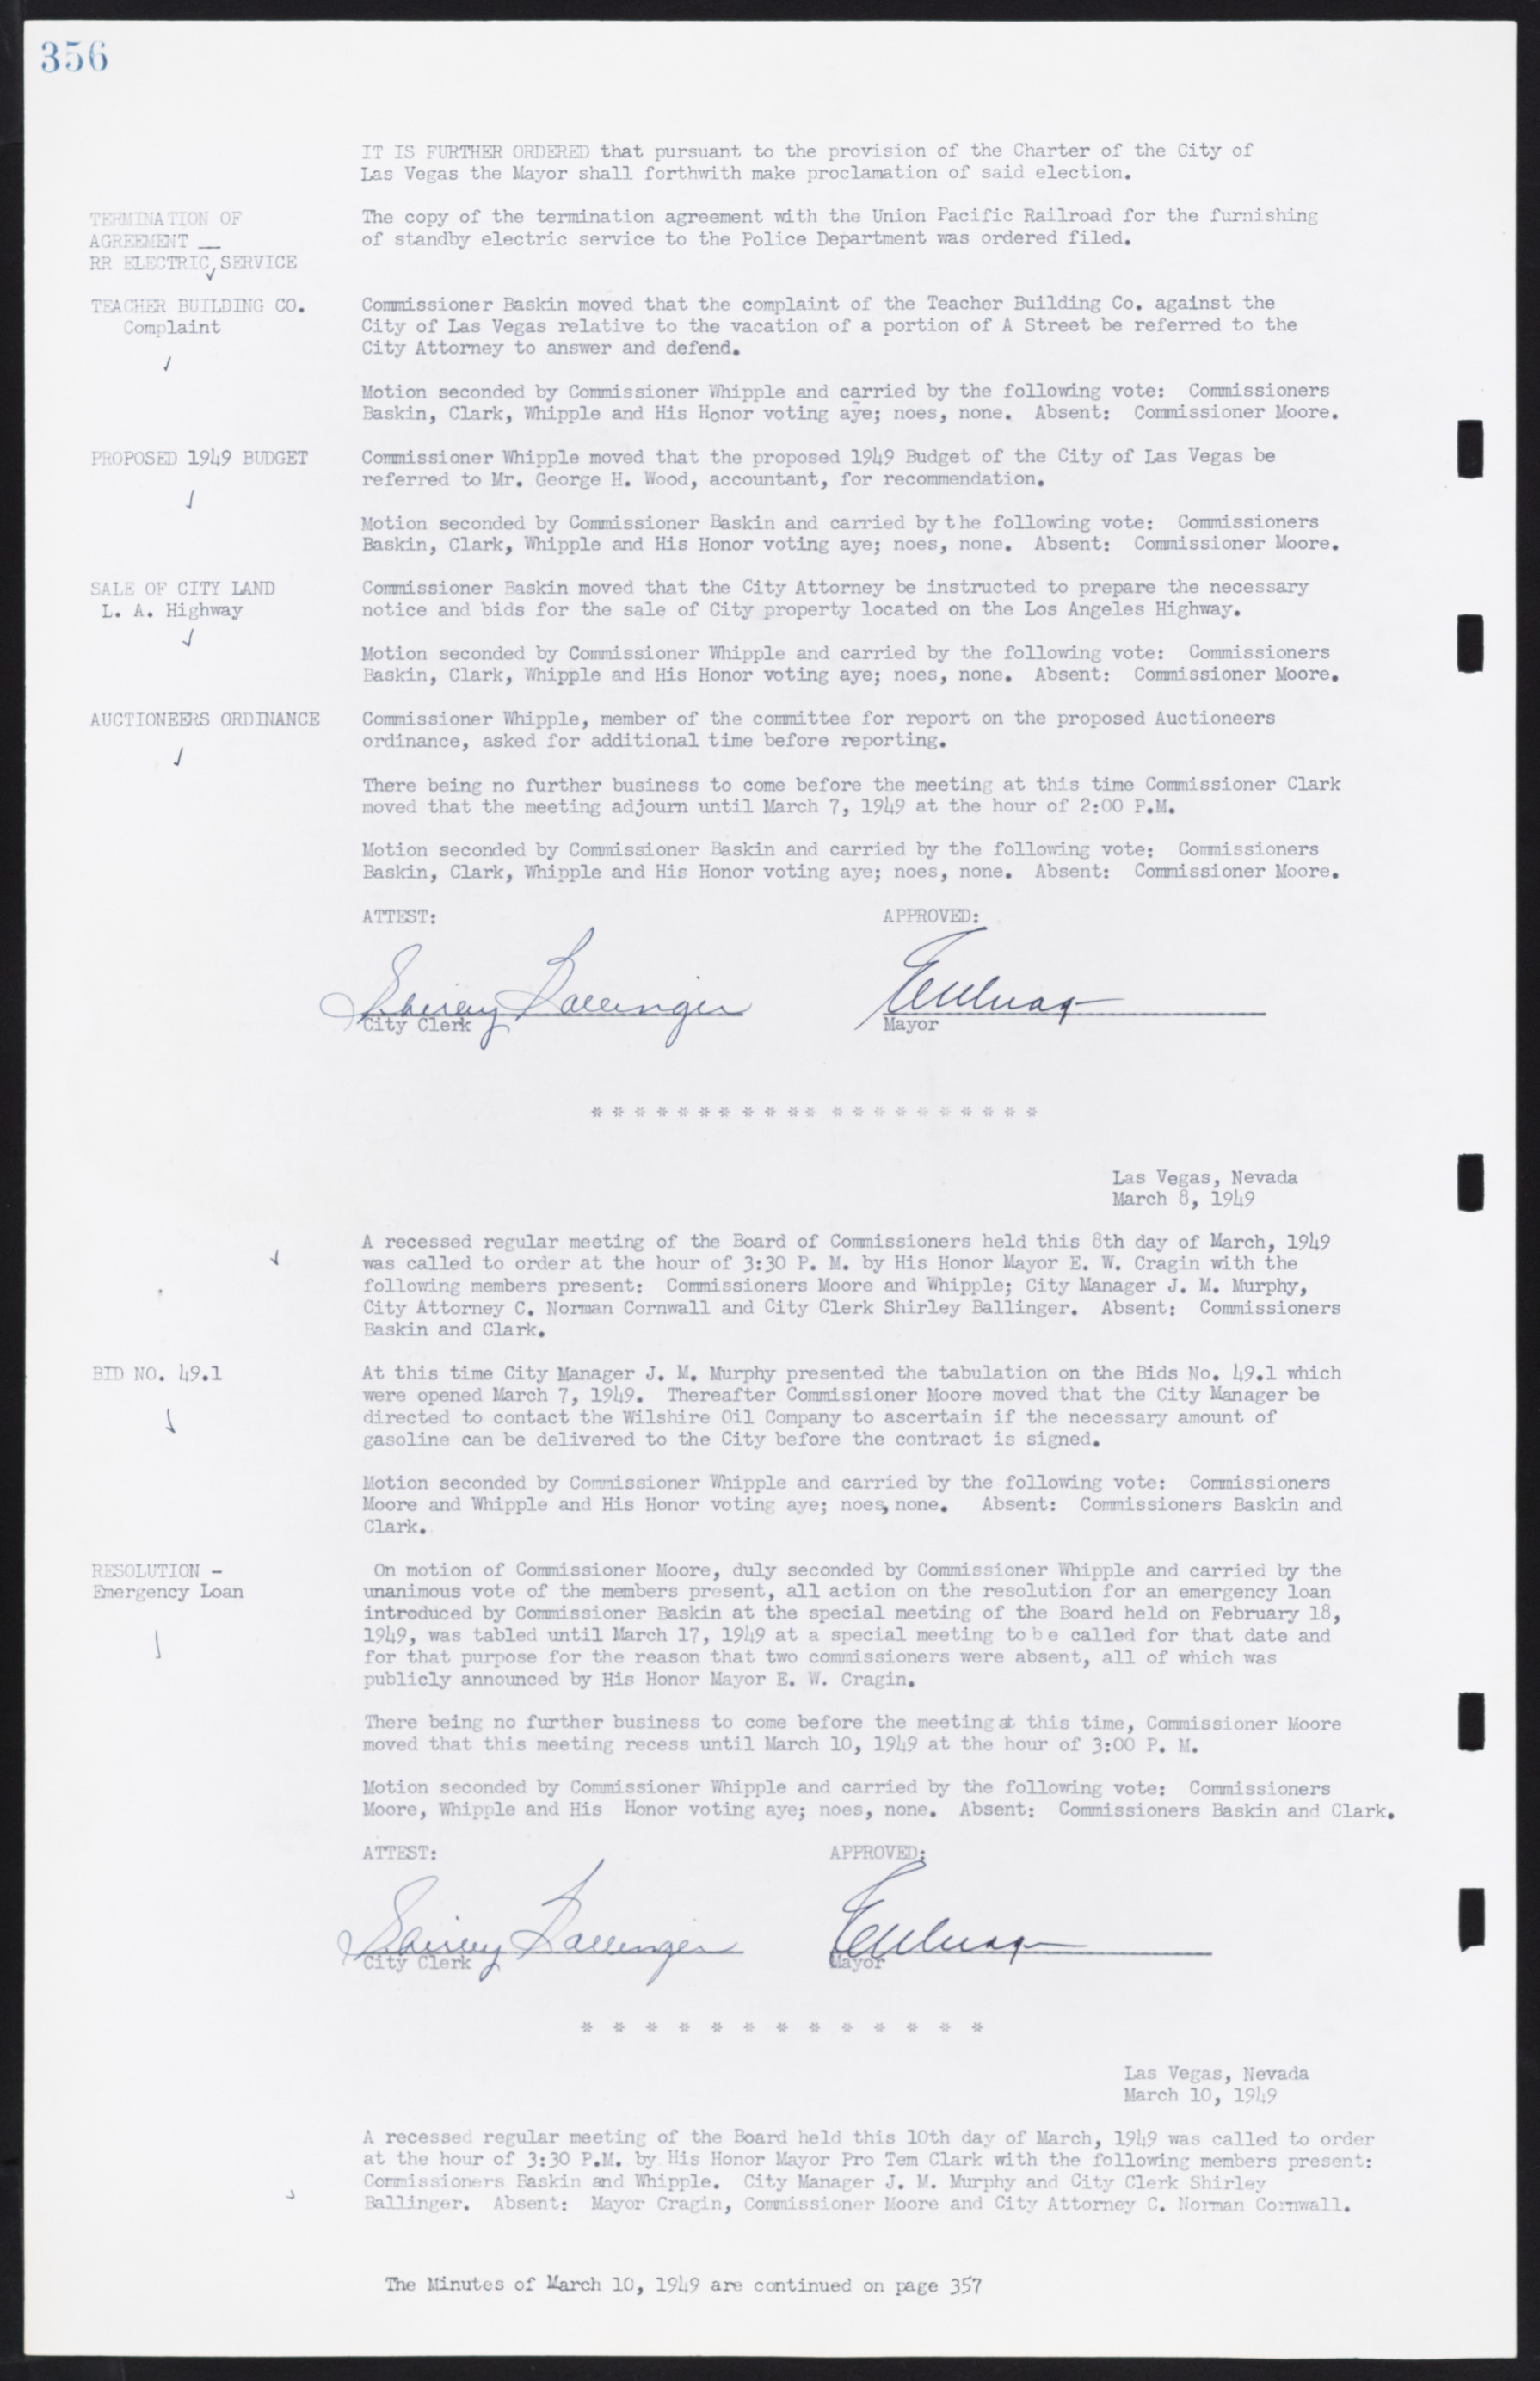 Las Vegas City Commission Minutes, January 7, 1947 to October 26, 1949, lvc000006-384